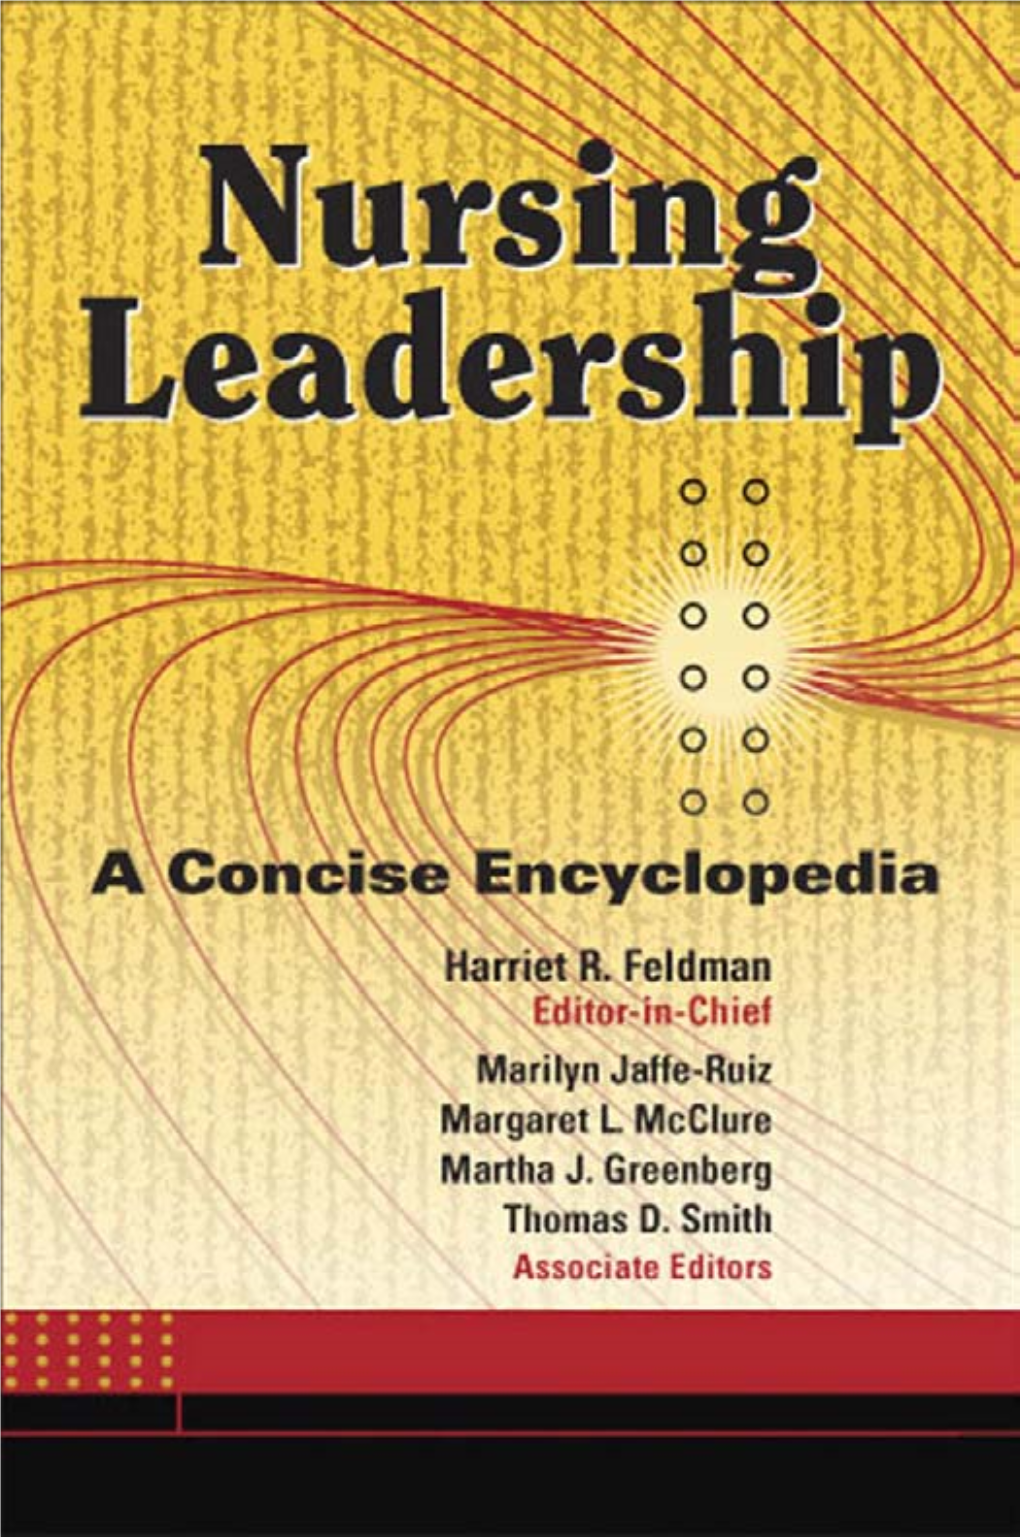 Nursing Leadership : a Concise Encyclopedia / Editor-In-Chief, Harriet R